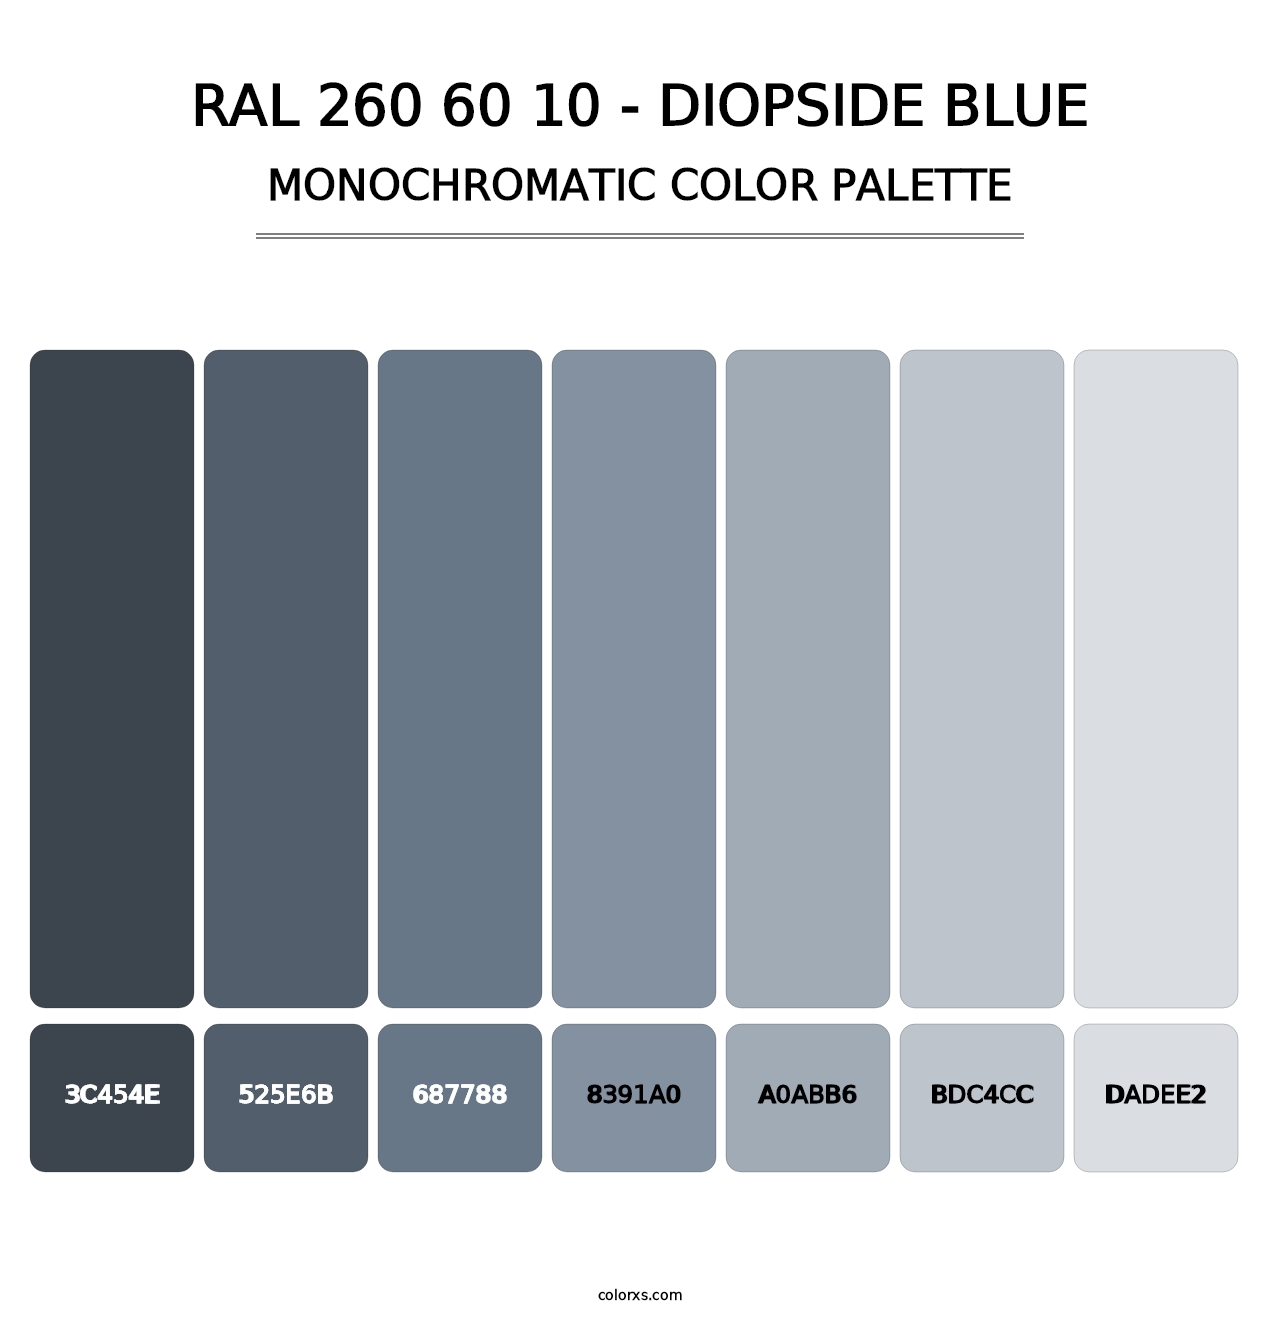 RAL 260 60 10 - Diopside Blue - Monochromatic Color Palette